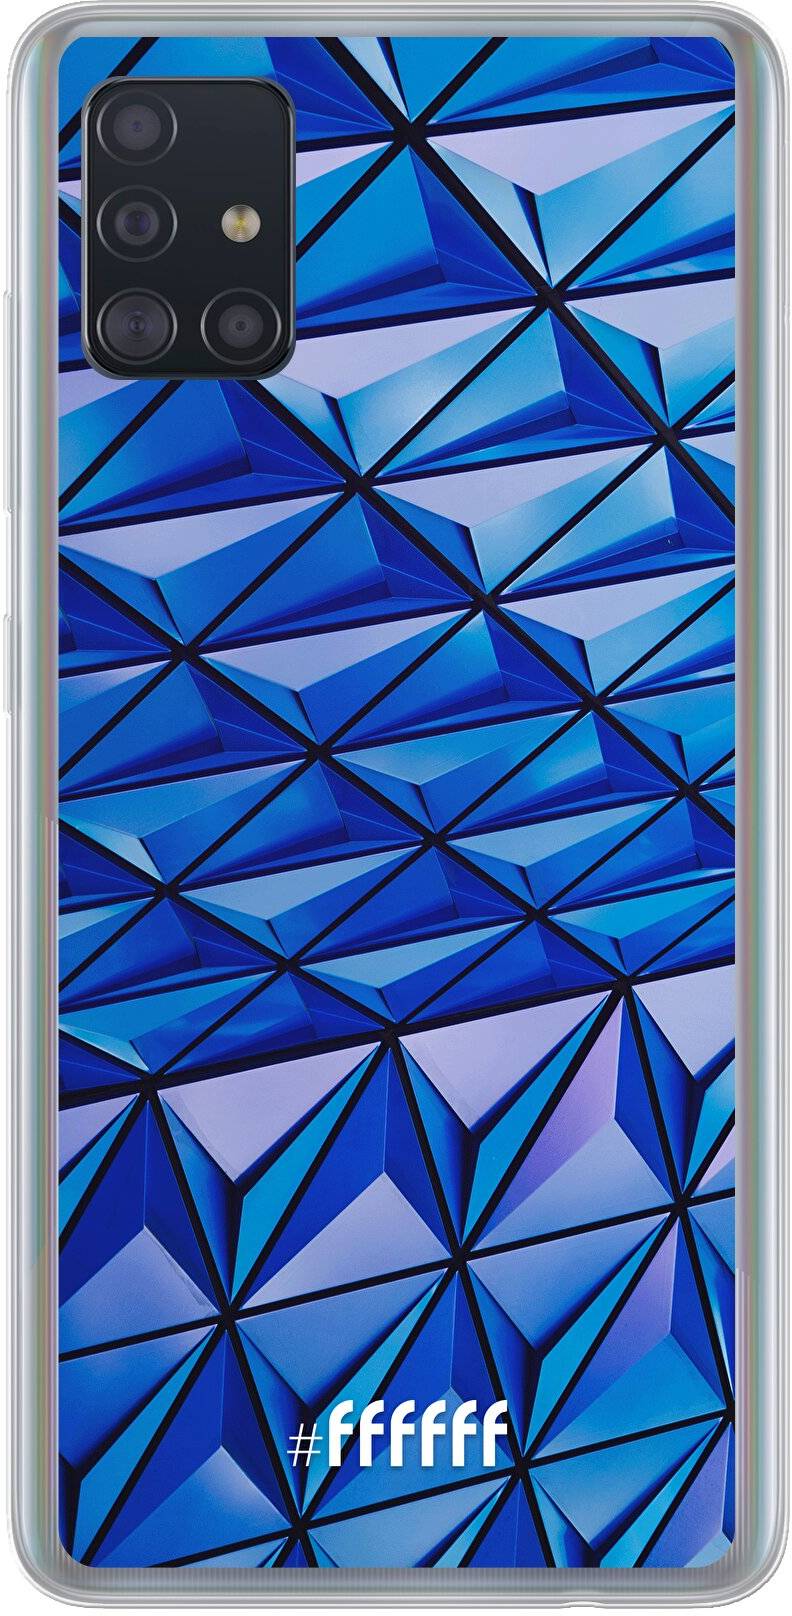 Ryerson Façade Galaxy A51